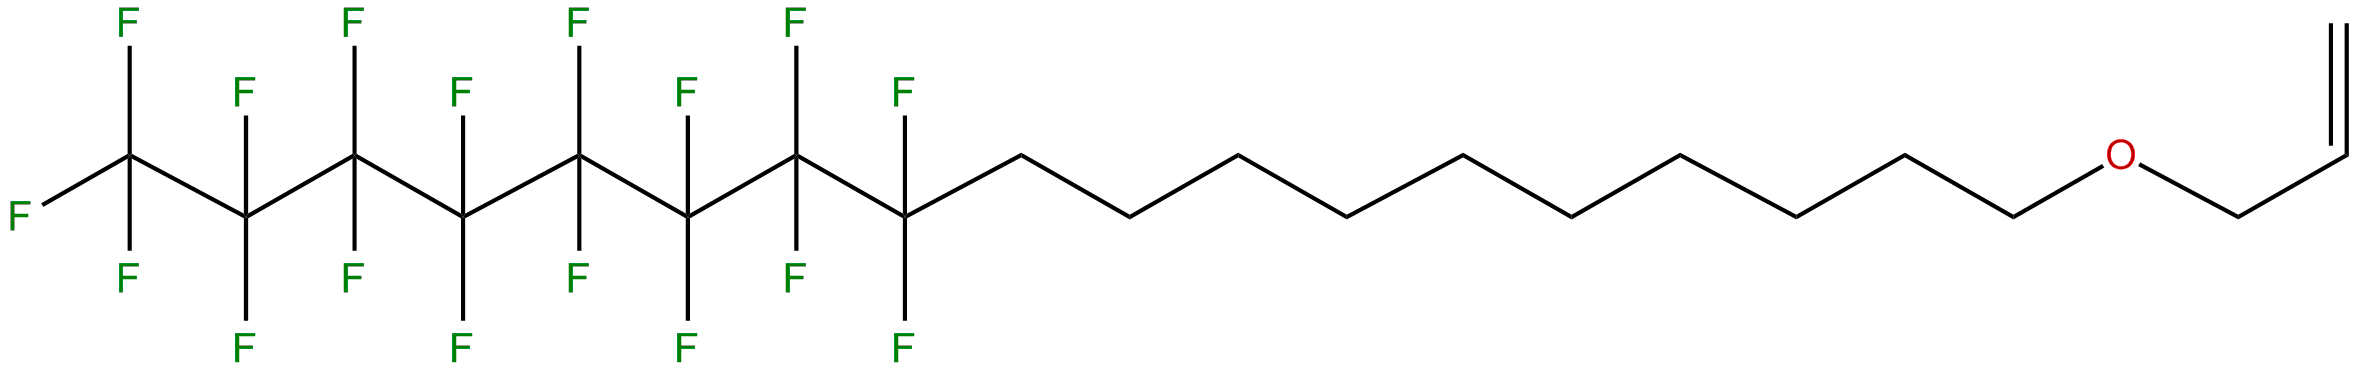 Image of 1,1,1,2,2,3,3,4,4,5,5,6,6,7,7,8,8-heptadecafluoro-18-(2-propenyloxy)octadecane